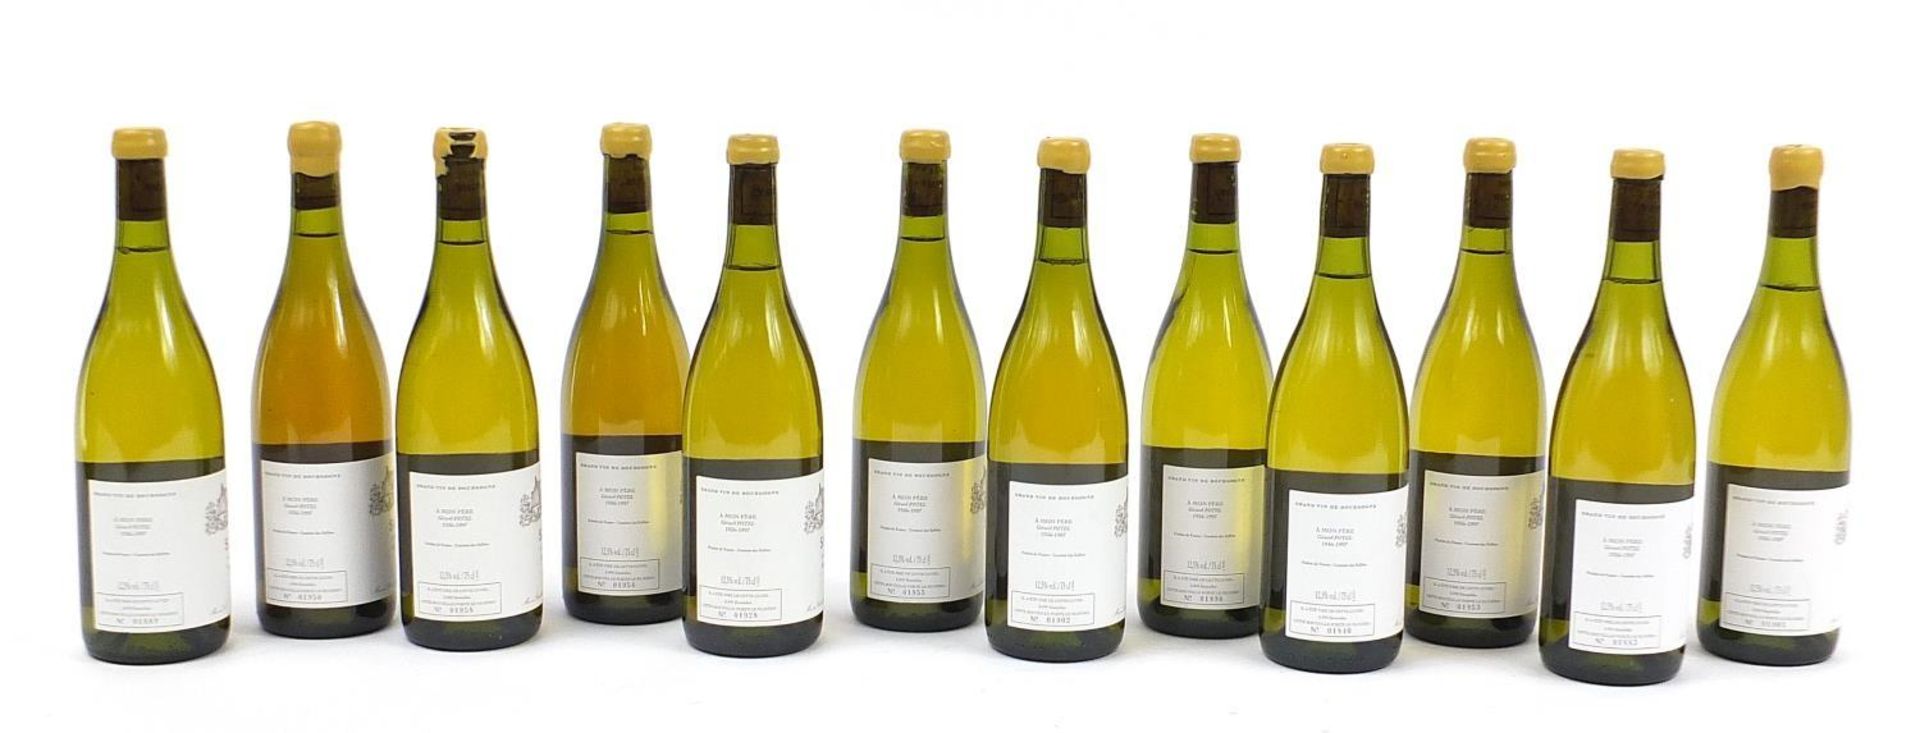 Twelve bottles of 2007 Saint-Romain Vieilles Vignes white wine - Image 4 of 4